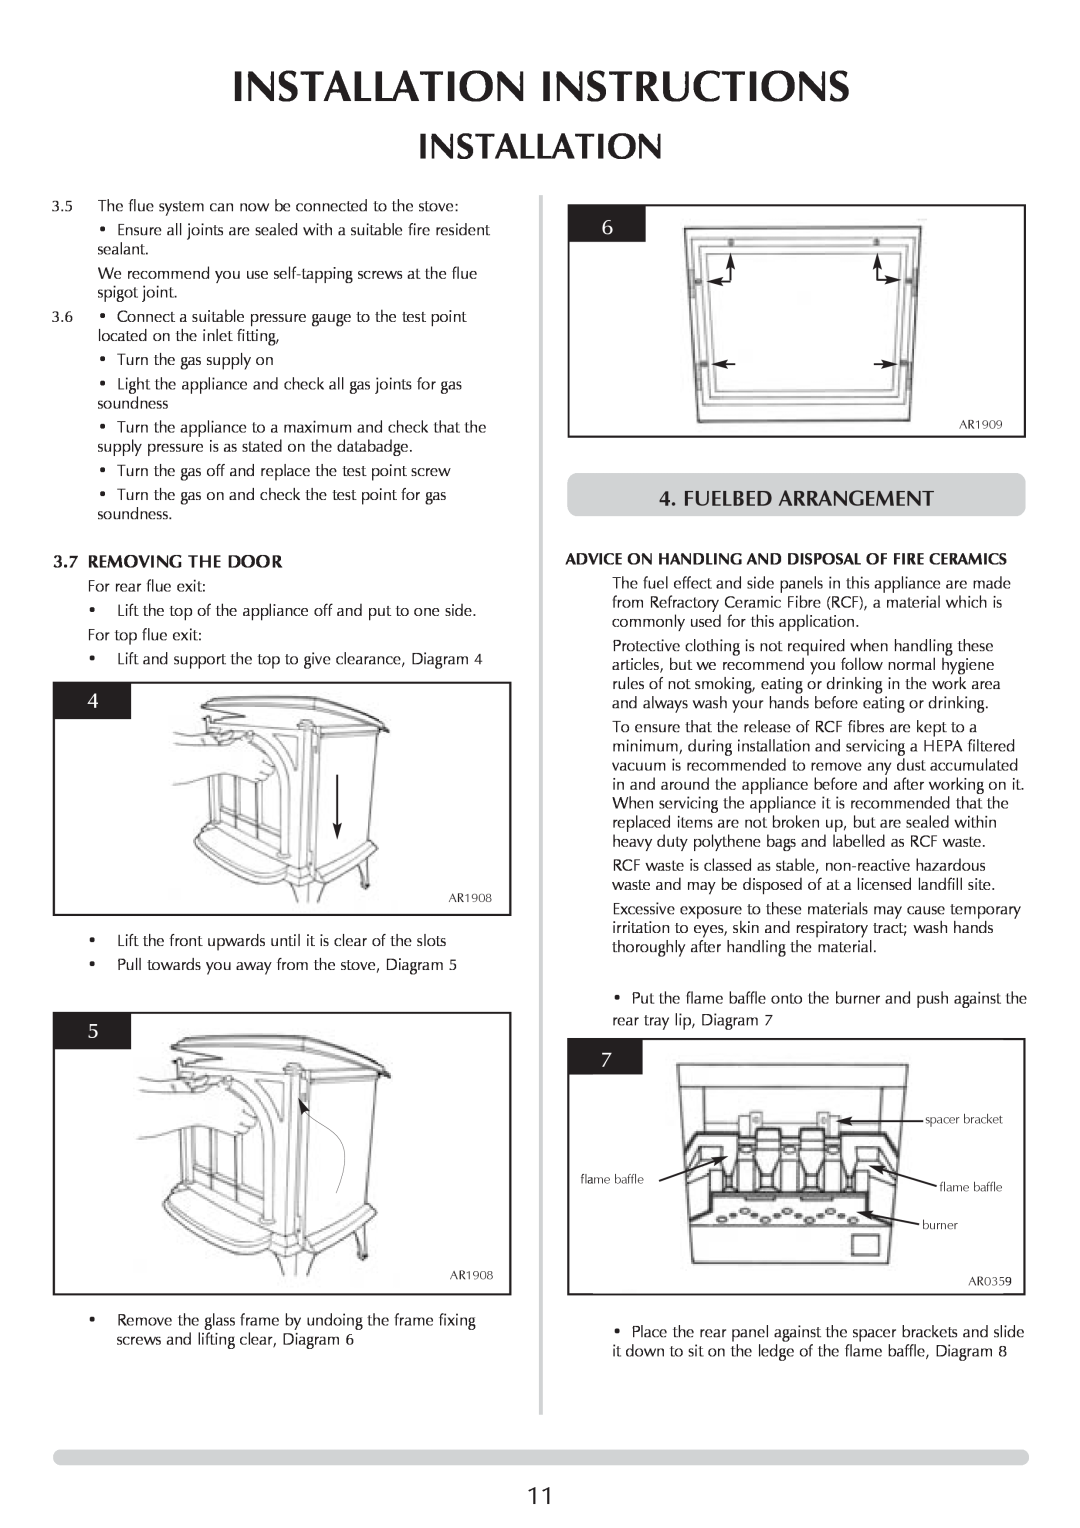 Stovax Huntingdon 30 manual Installation Instructions, Fuelbed Arrangement, 3.7REMOVING THE DOOR 